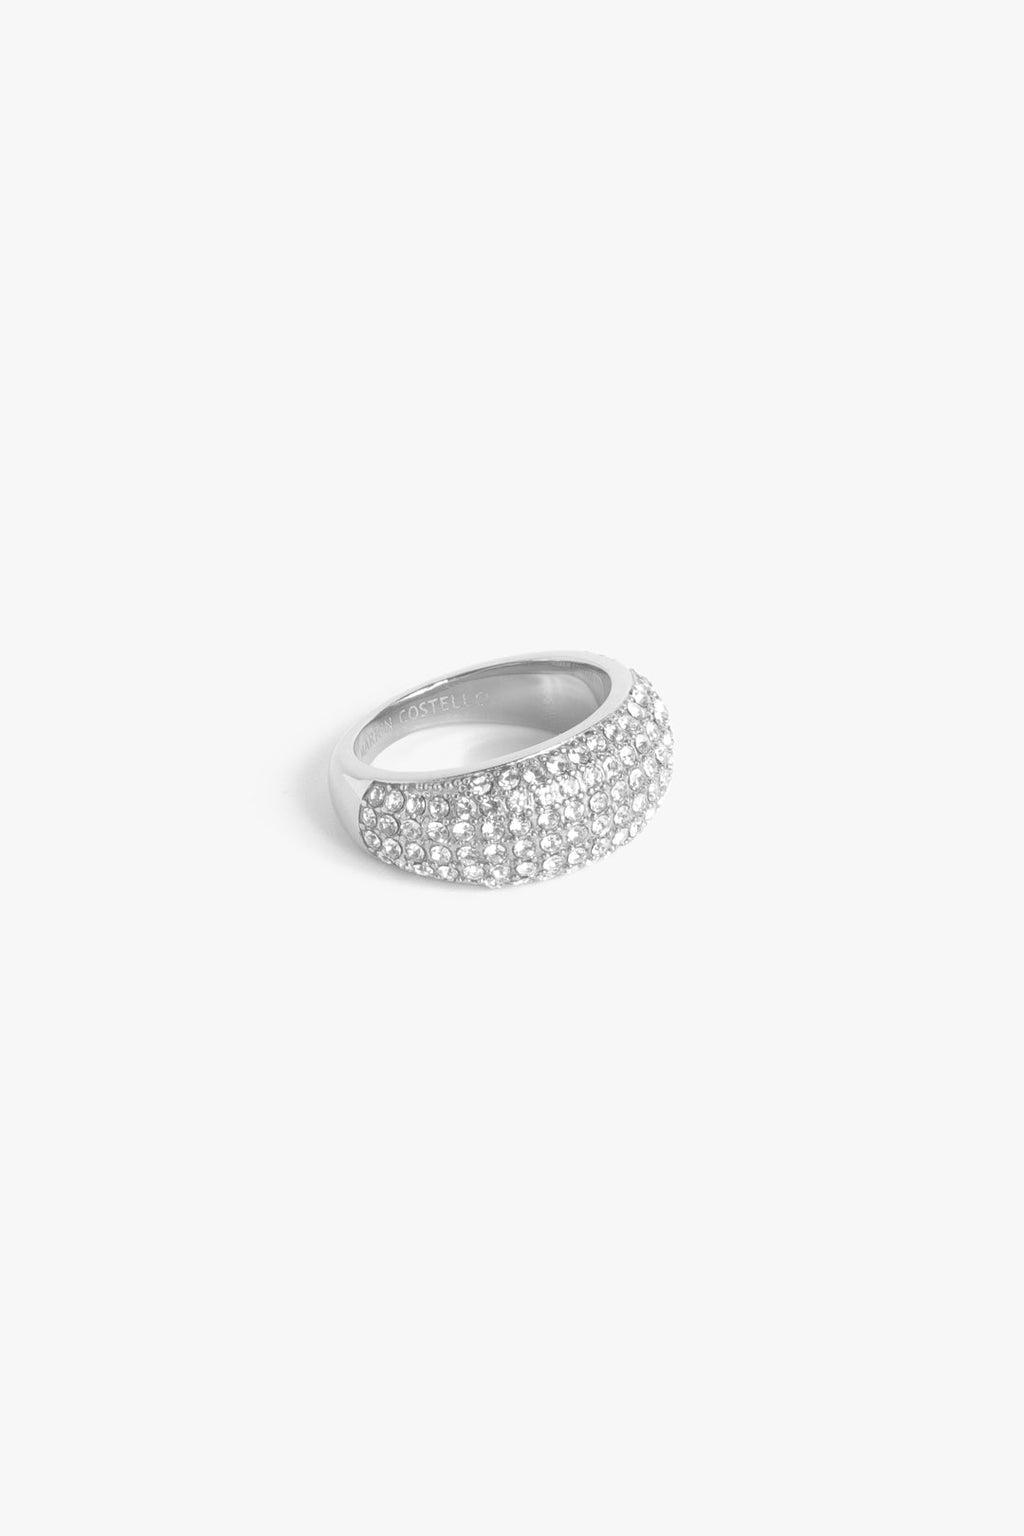 Marrin Costello Jewelry - Layla Diamond Ring - Silver